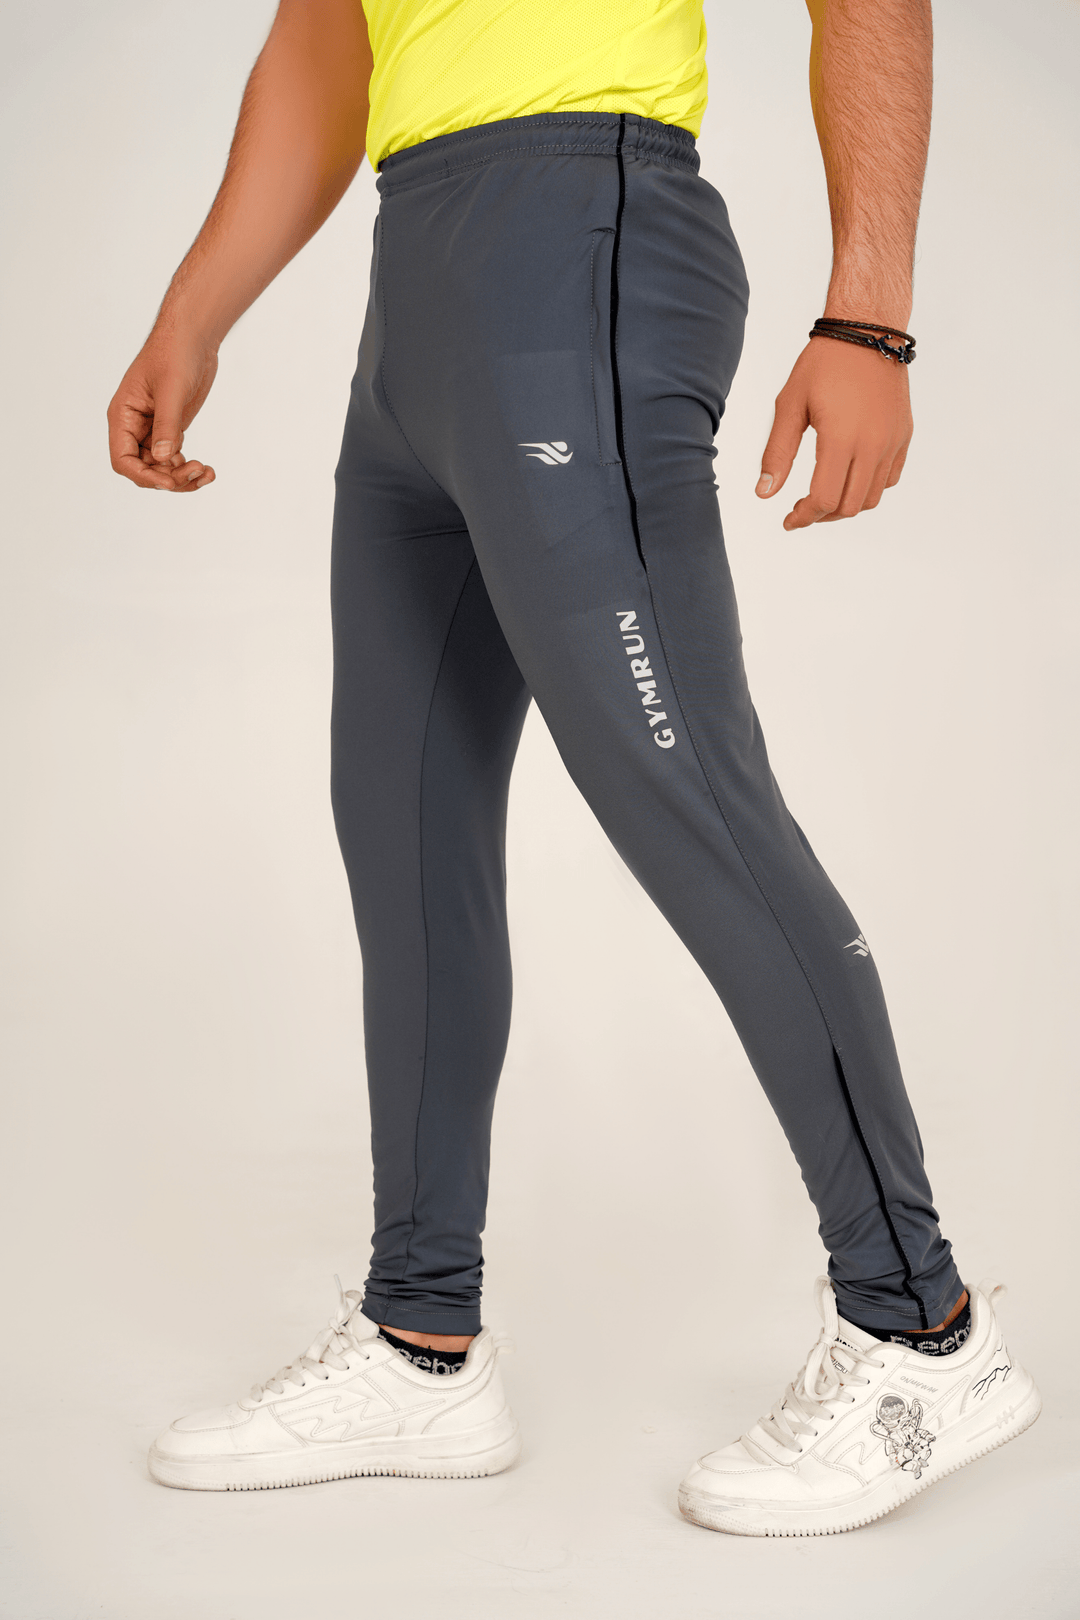 Pro-Fit Men's Performance Trousers-Grey - GYMRUN Activewear